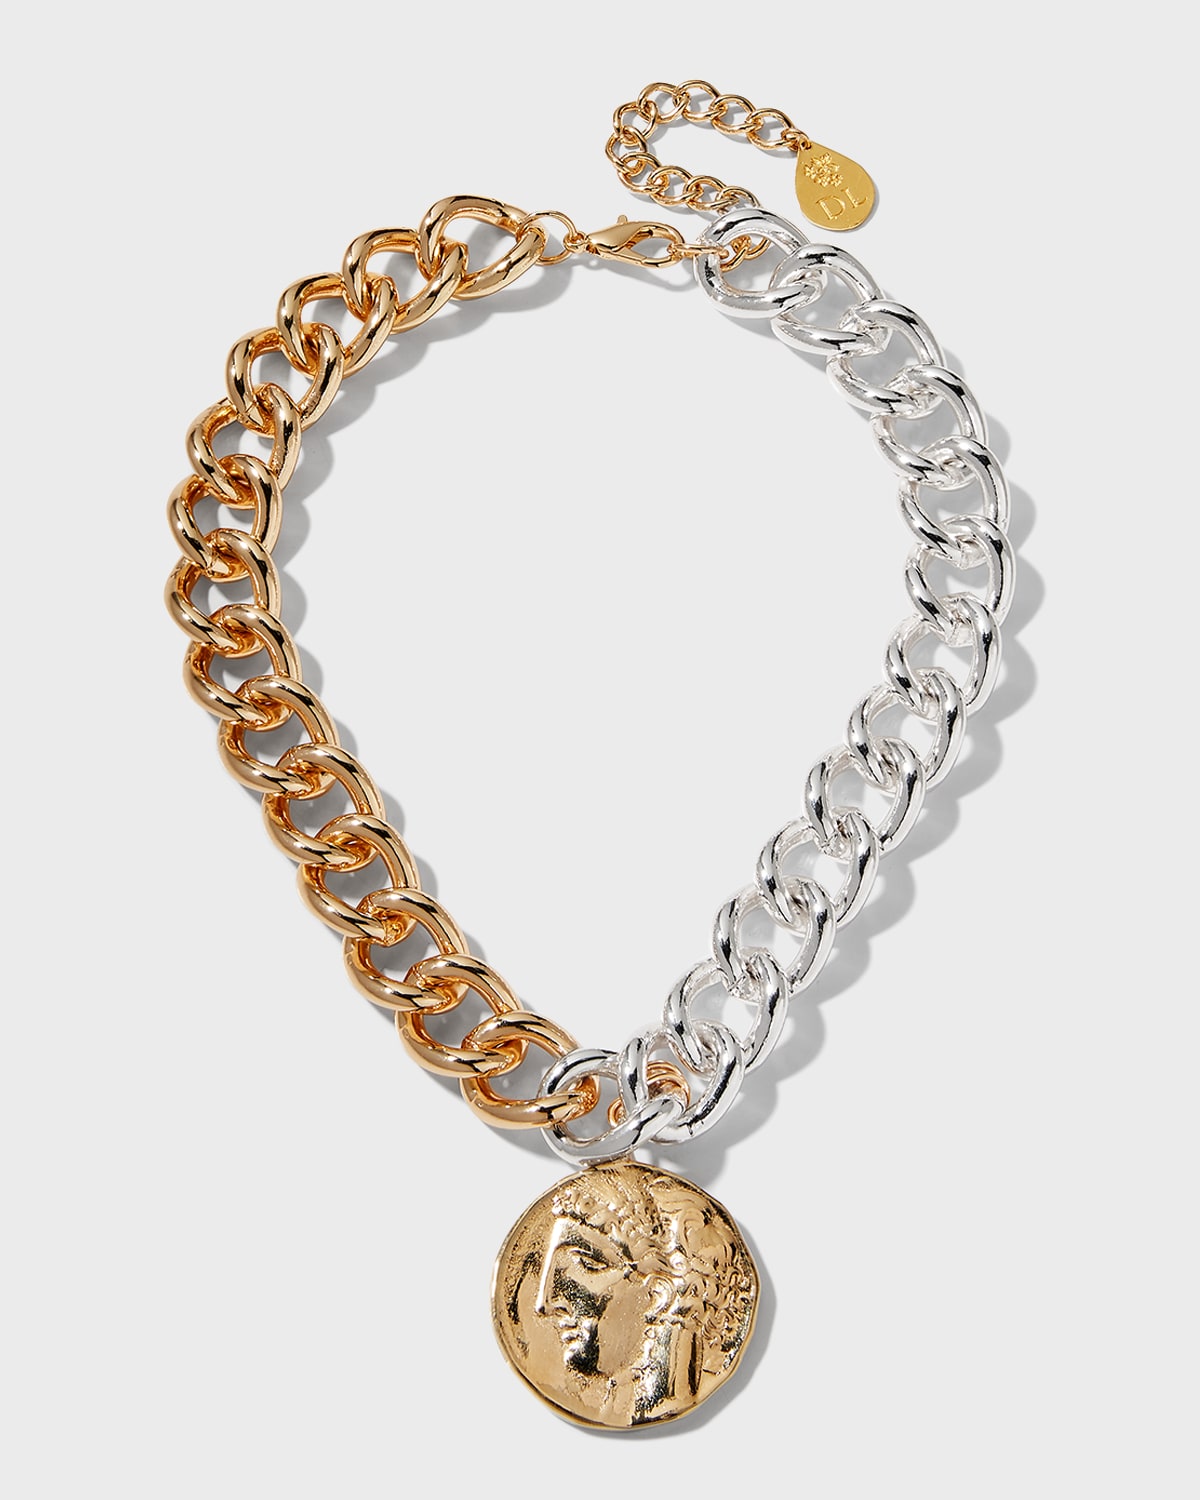 Devon Leigh Two-Tone Chain Coin Pendant Necklace